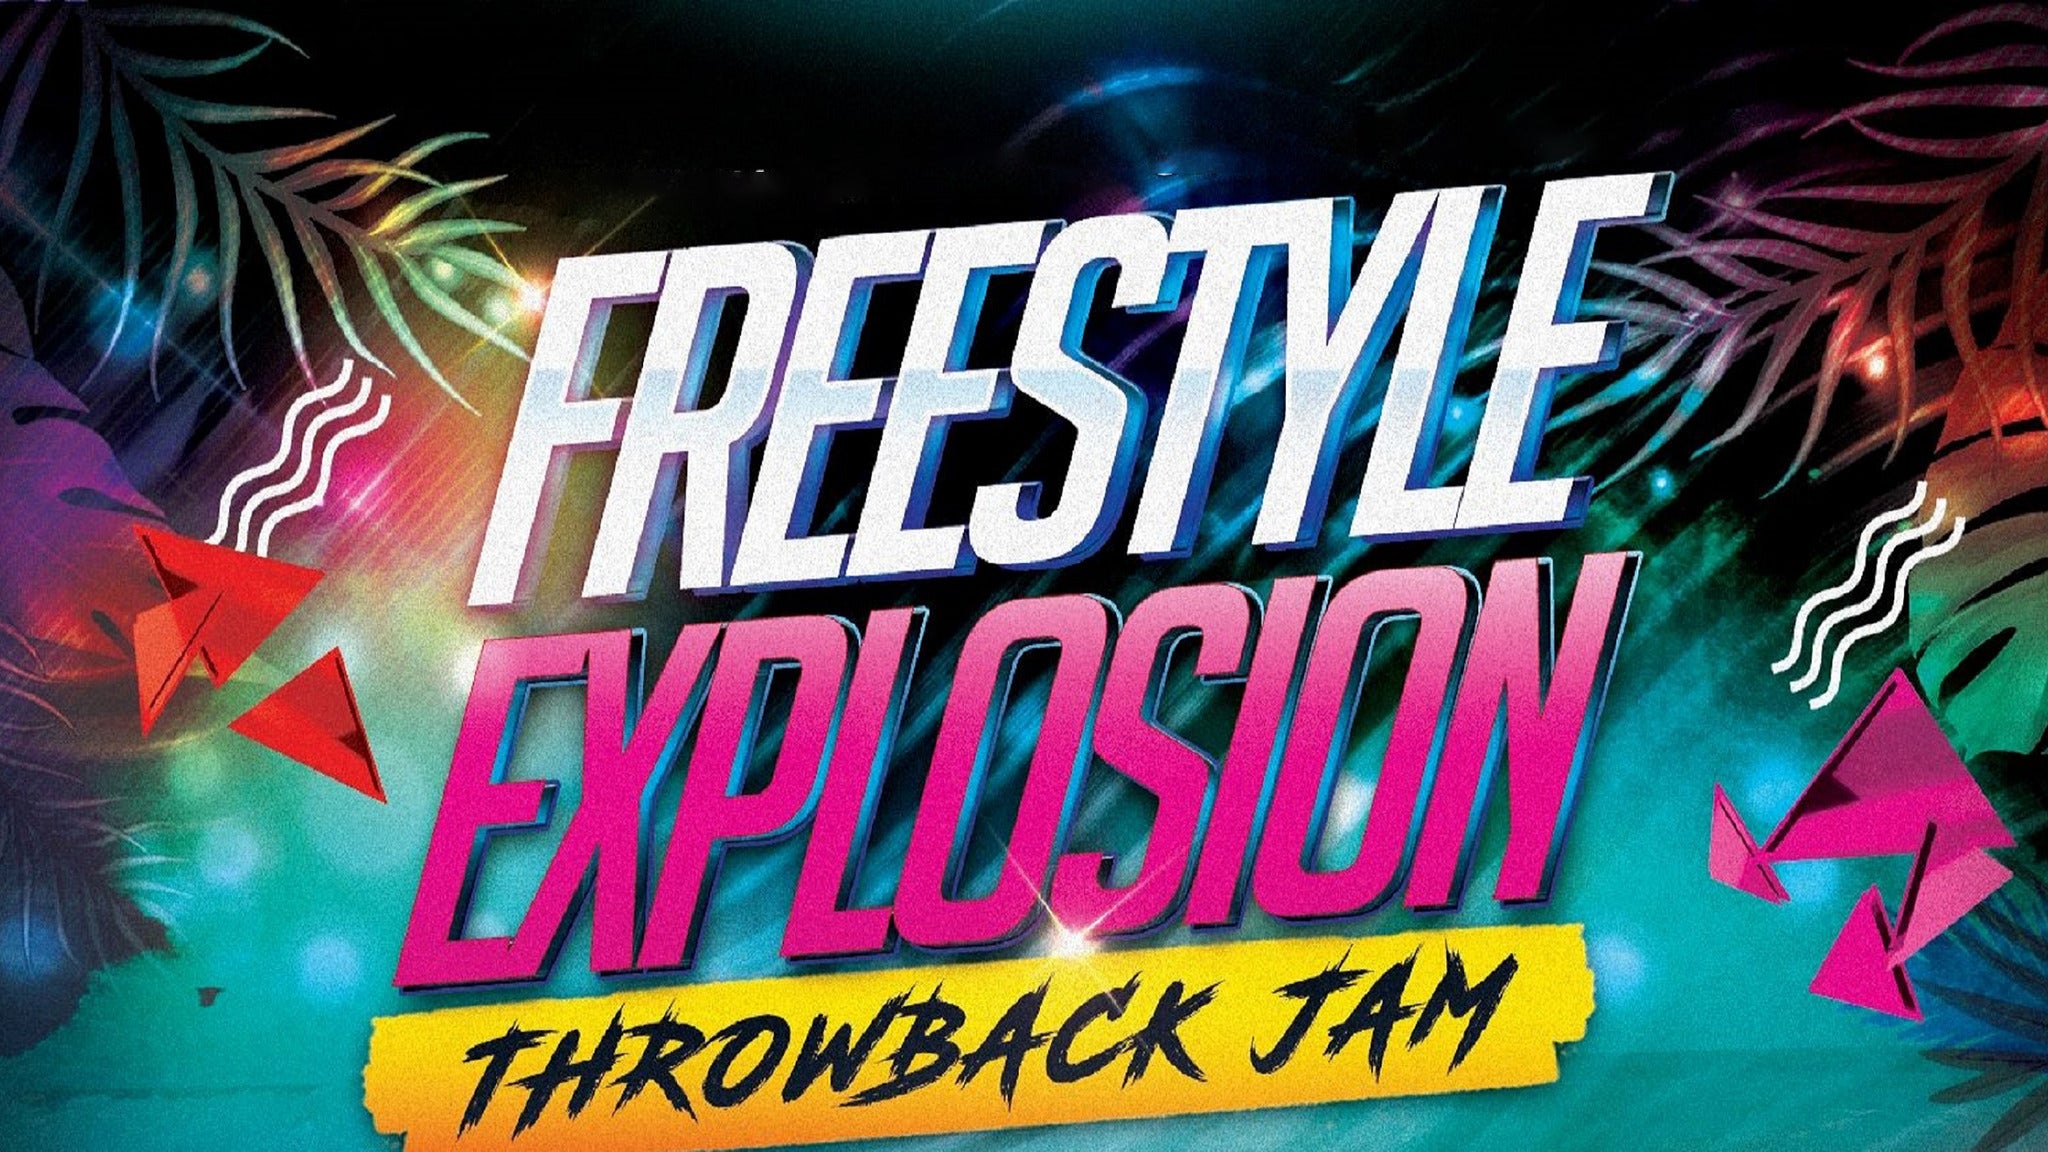 Freestyle Explosion Throwback Jam presale information on freepresalepasswords.com